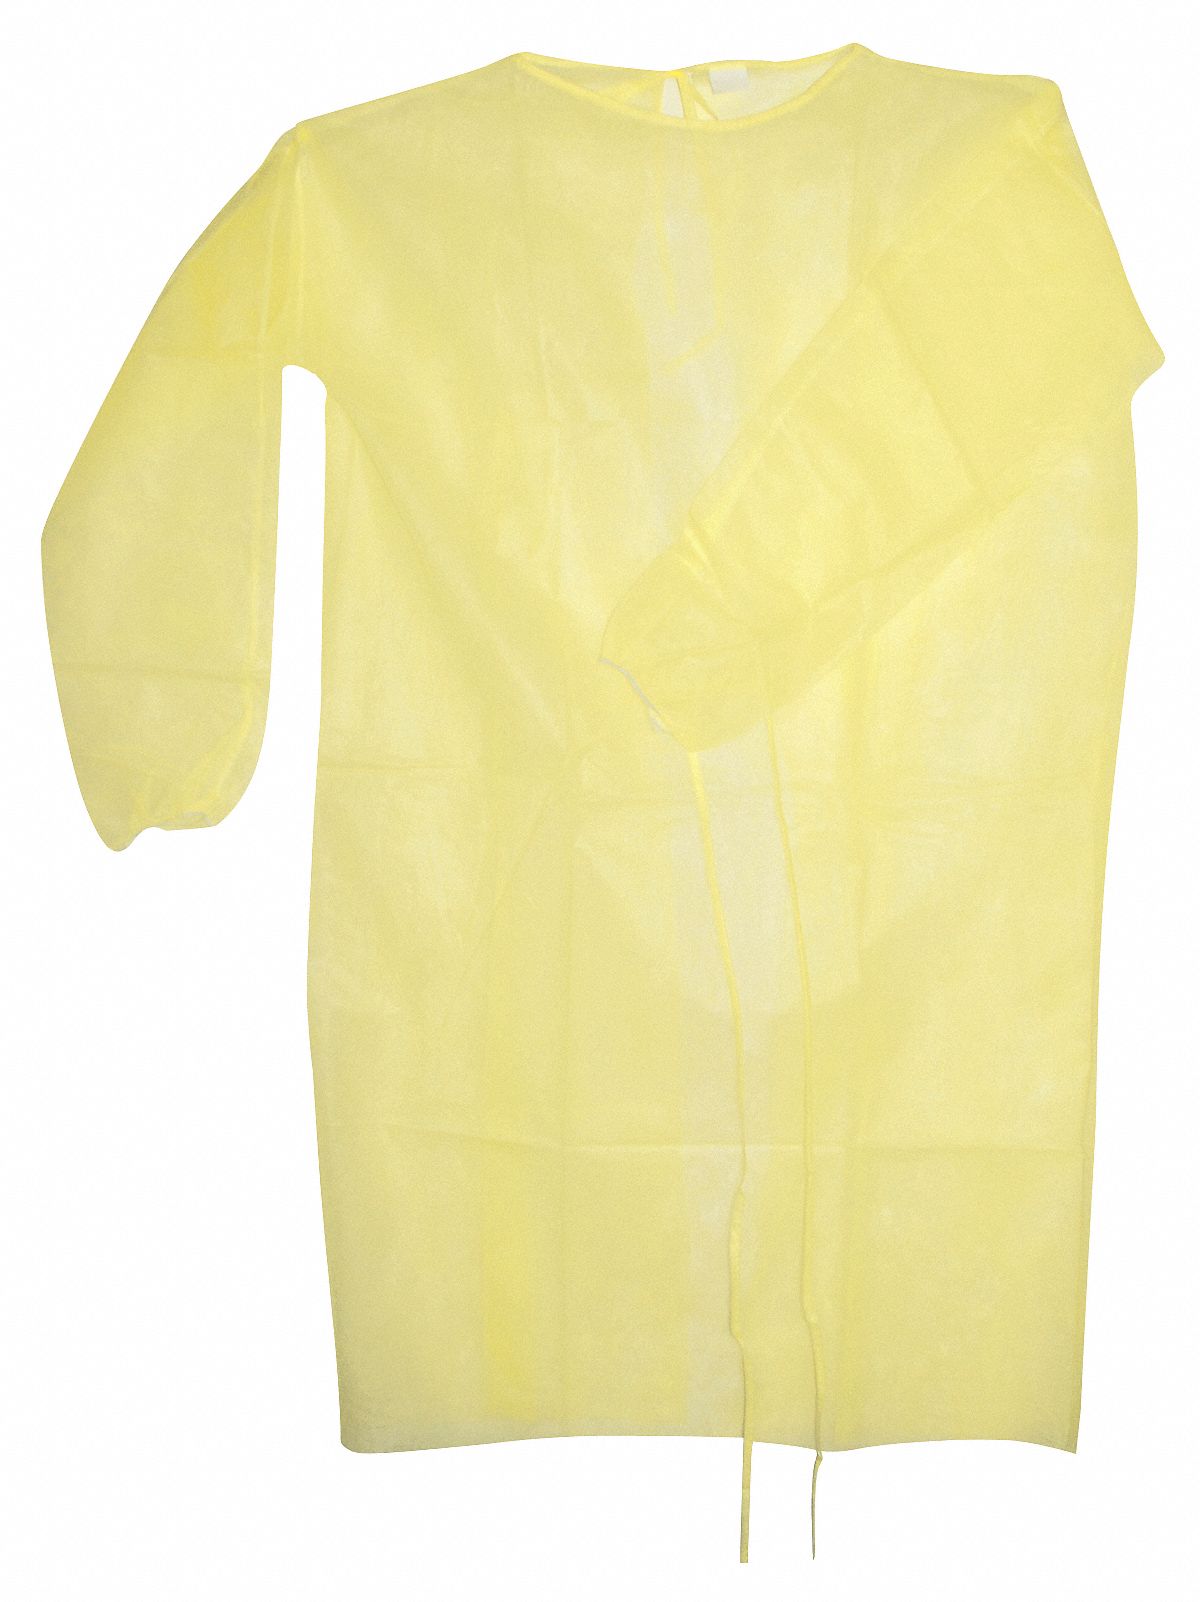 Barrier Isolation Gown: Elastic, Open-Back Back, Spunbond Polypropylene, Yellow, XL, 50 PK